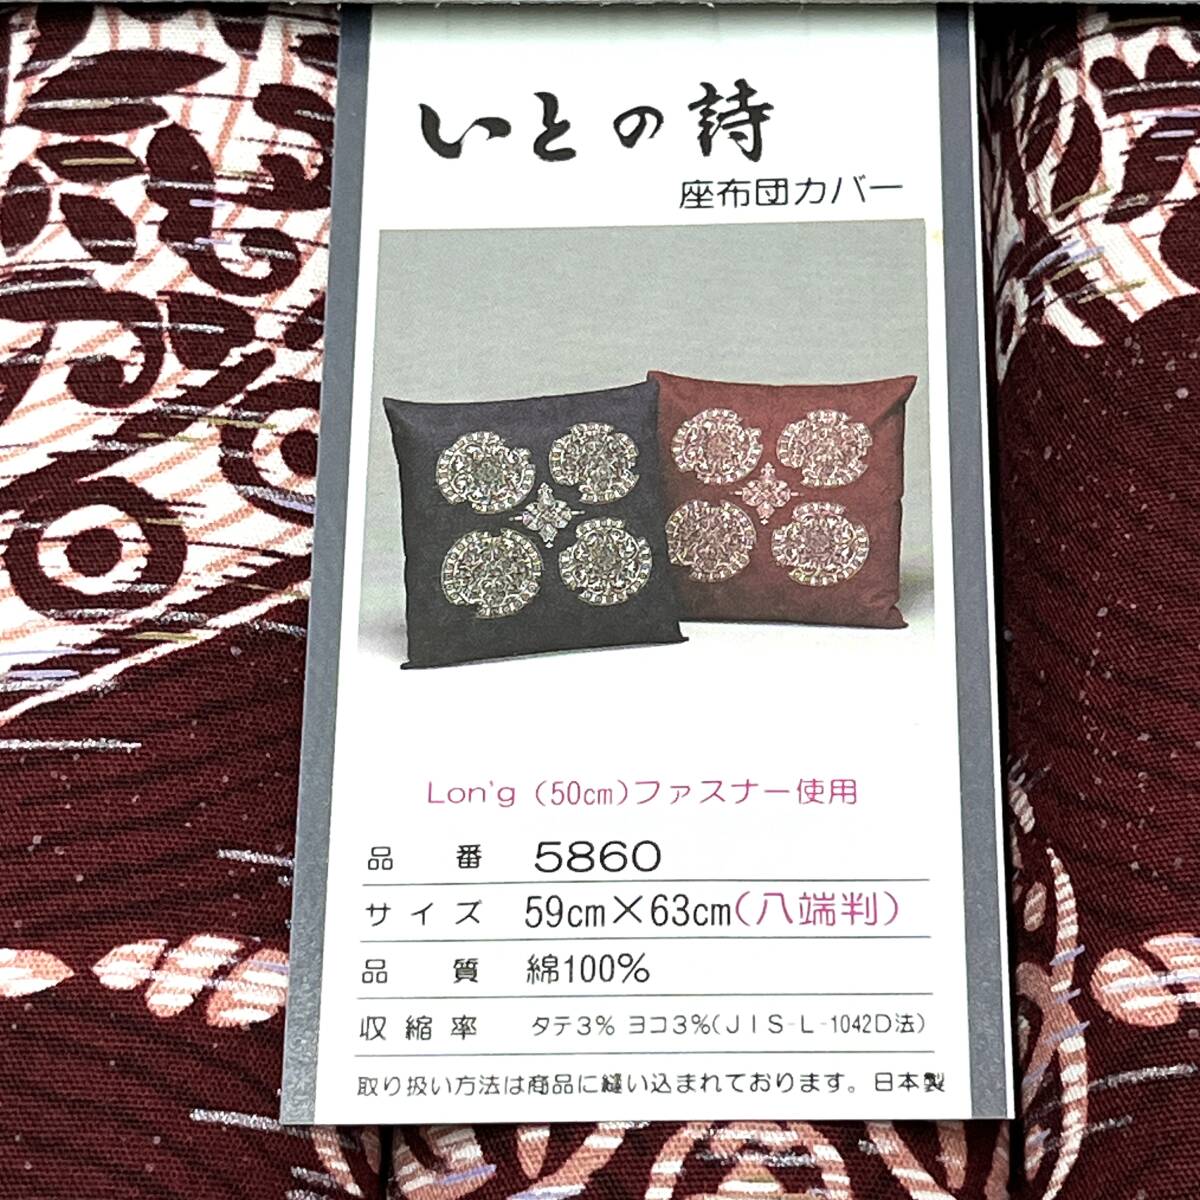  zabuton cover 5 sheets cotton 100% 59×63. edge stamp ... poetry unused (4334)